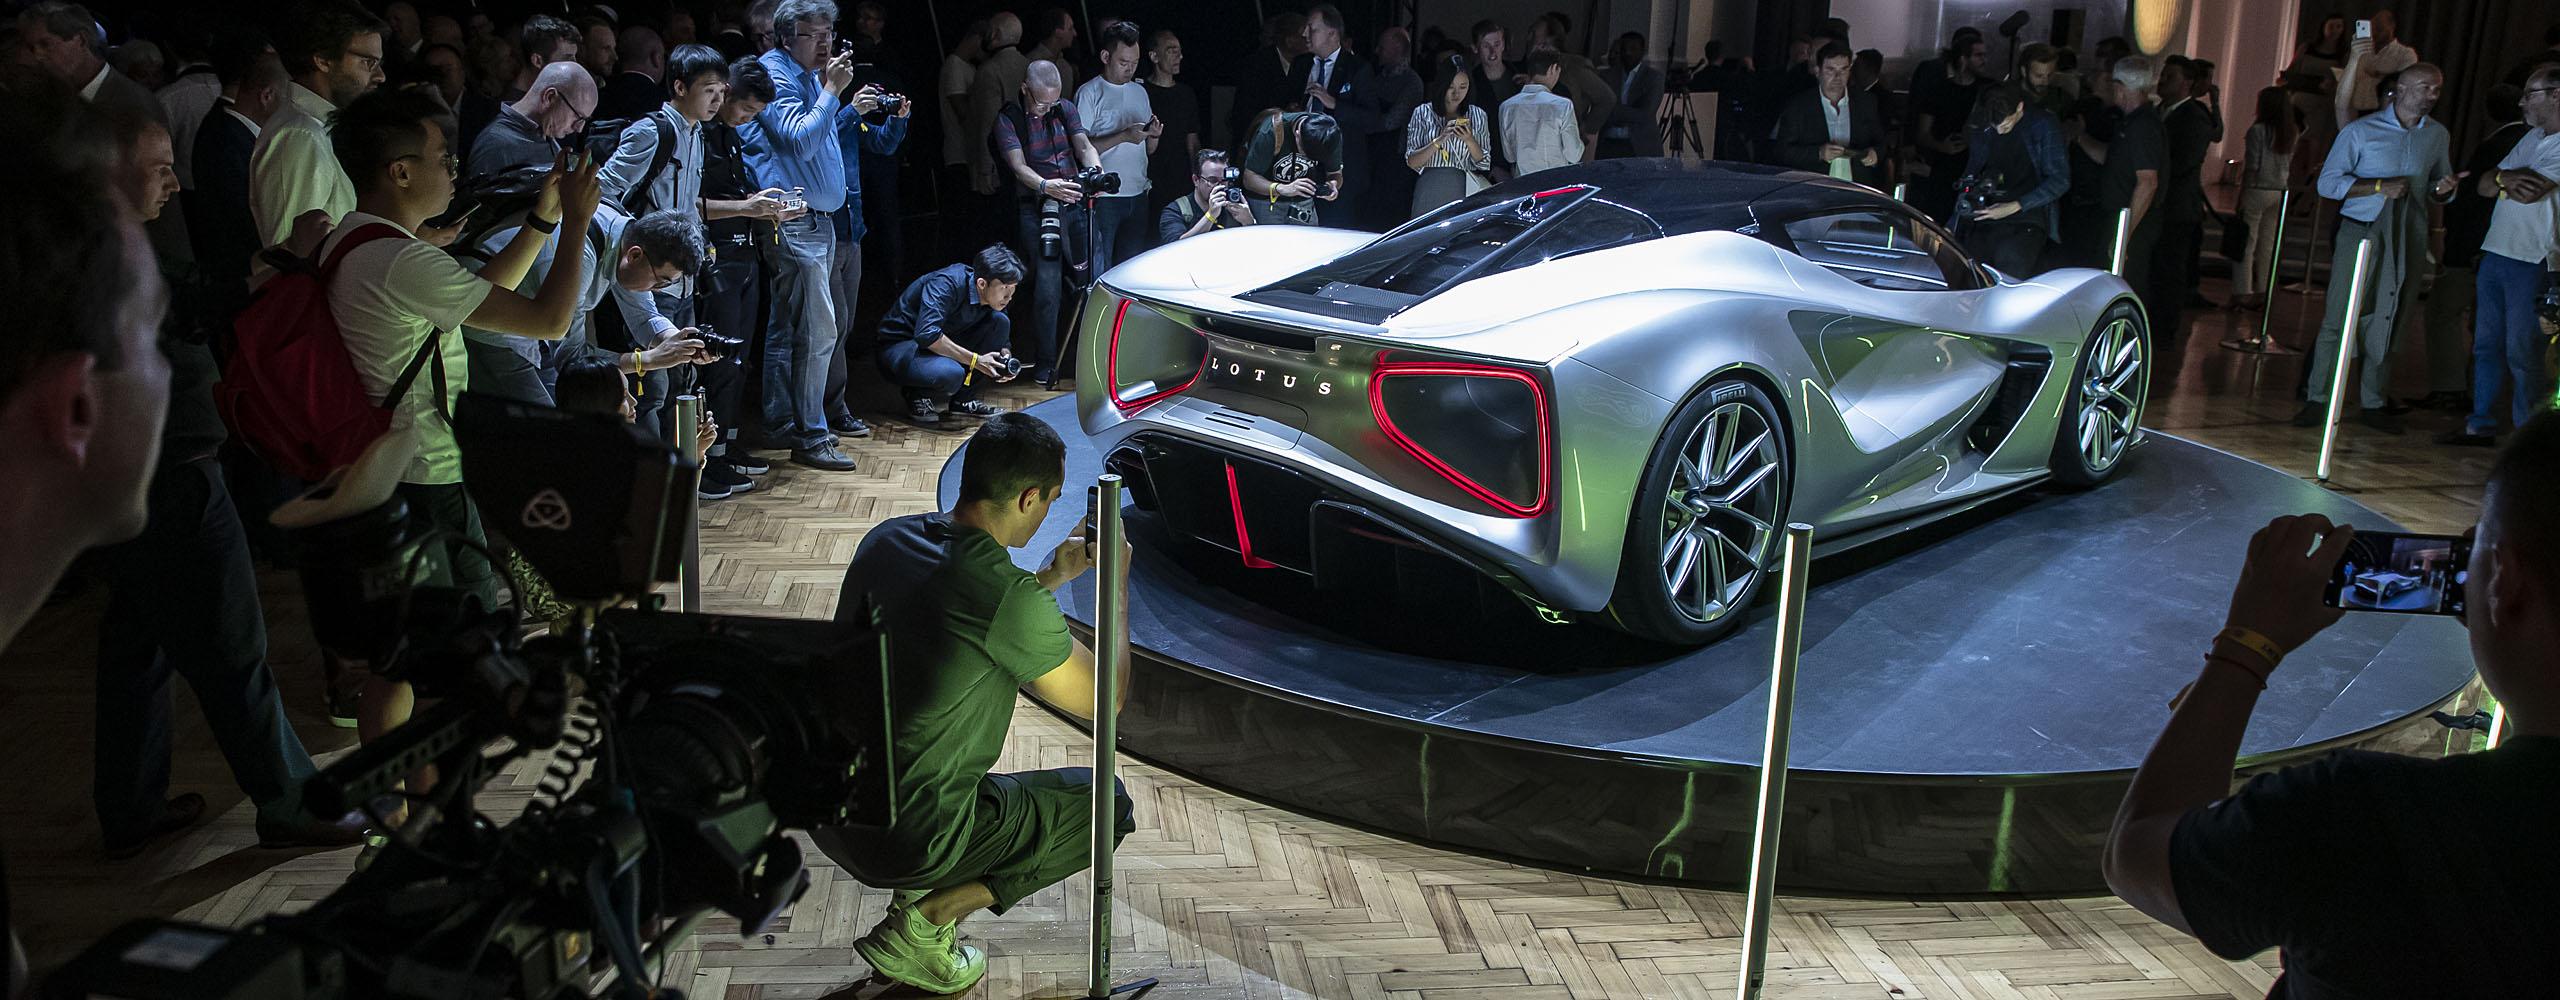 Evija: Lotus unveils world's most powerful production car